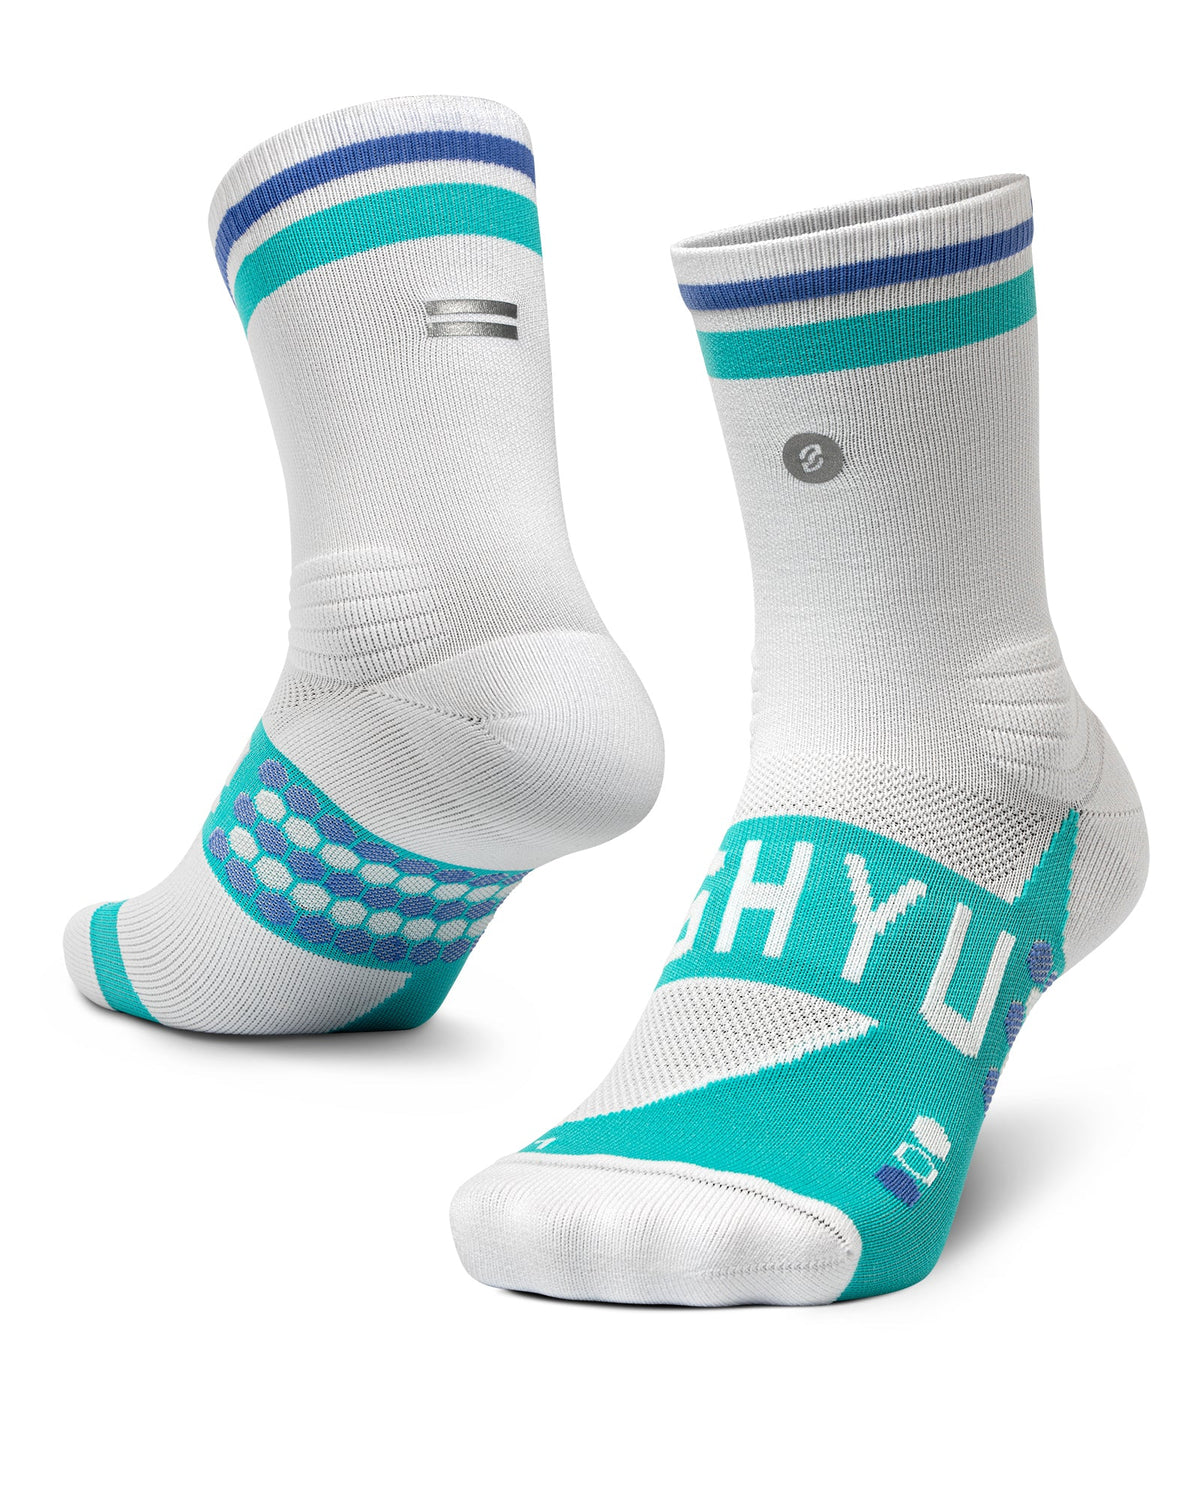 SHYU racing socks - white | jade | royal (small sizes)